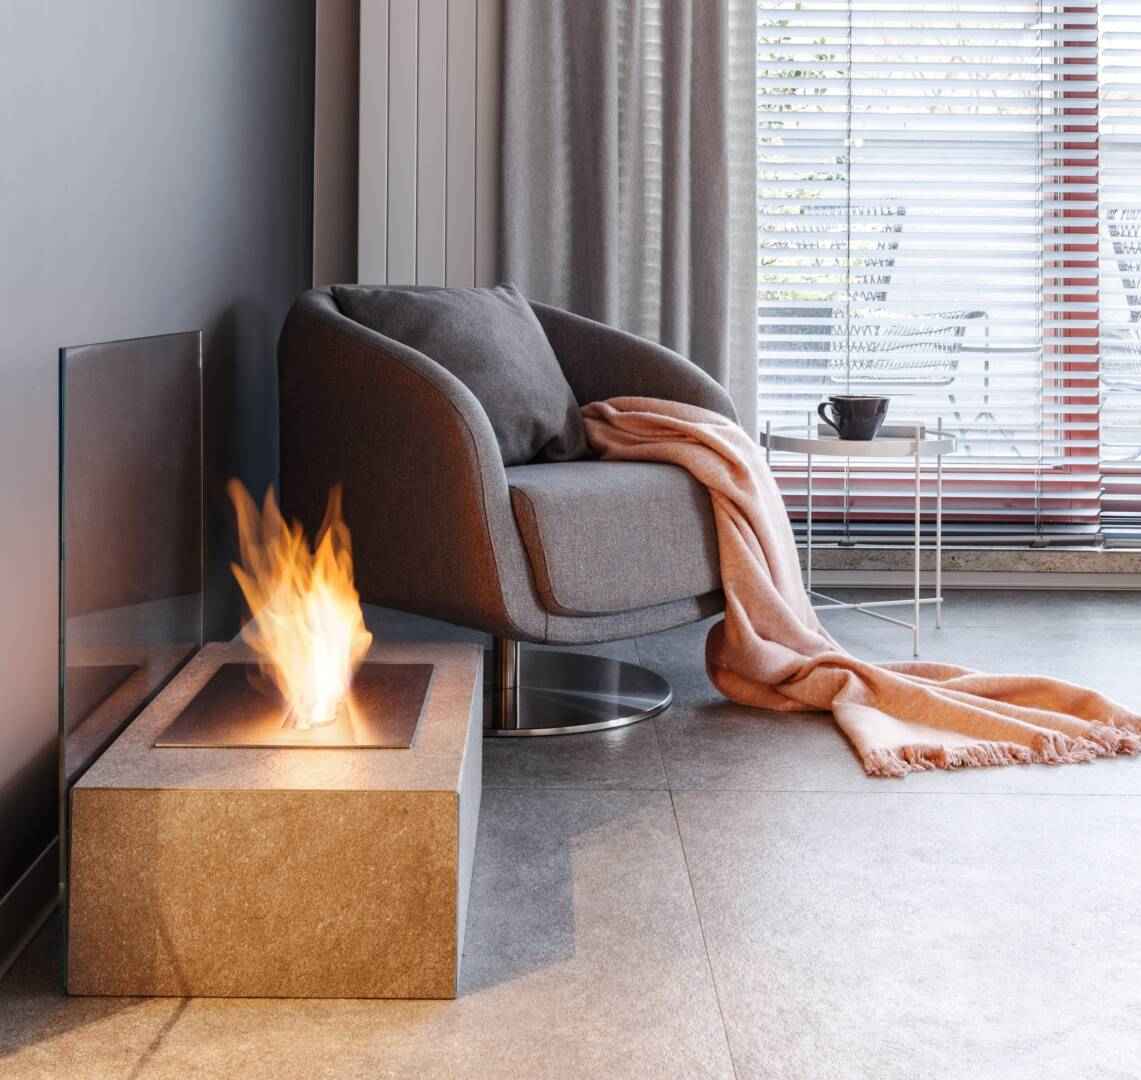 fireplace-in-cozy-living-room-2021-08-26-15-45-20-utc-1